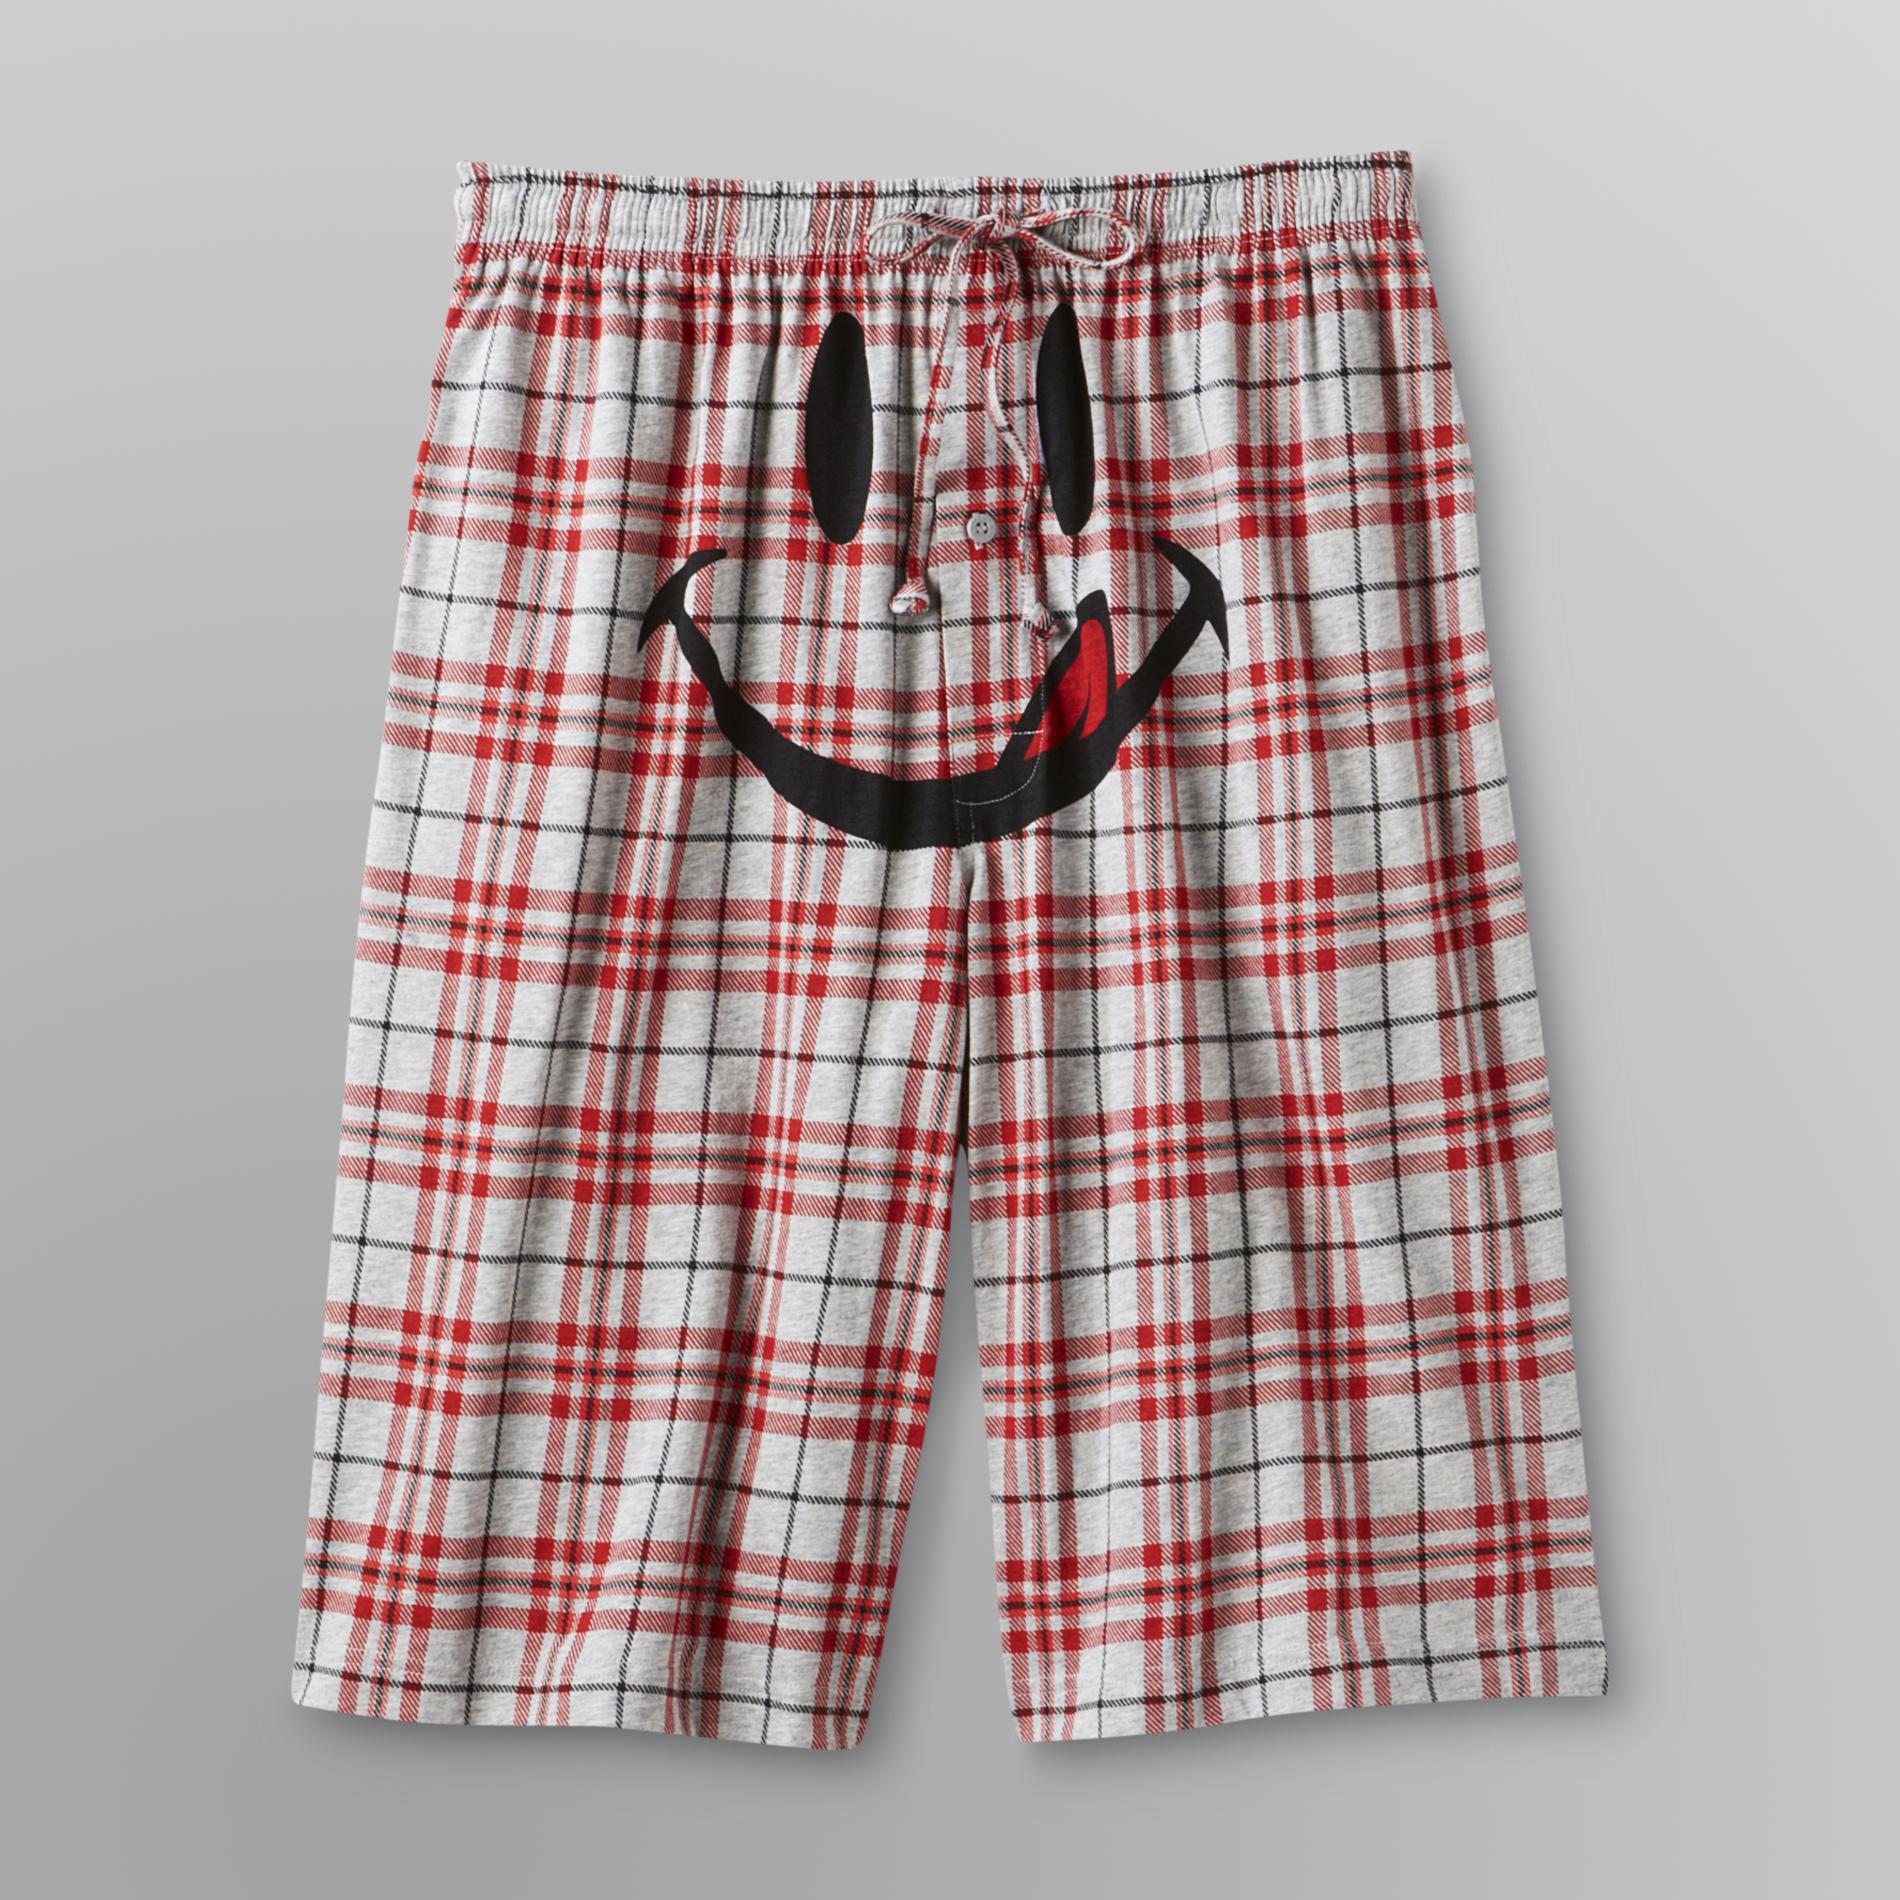 Joe Boxer Men's Knit Pajama Shorts - Smiley